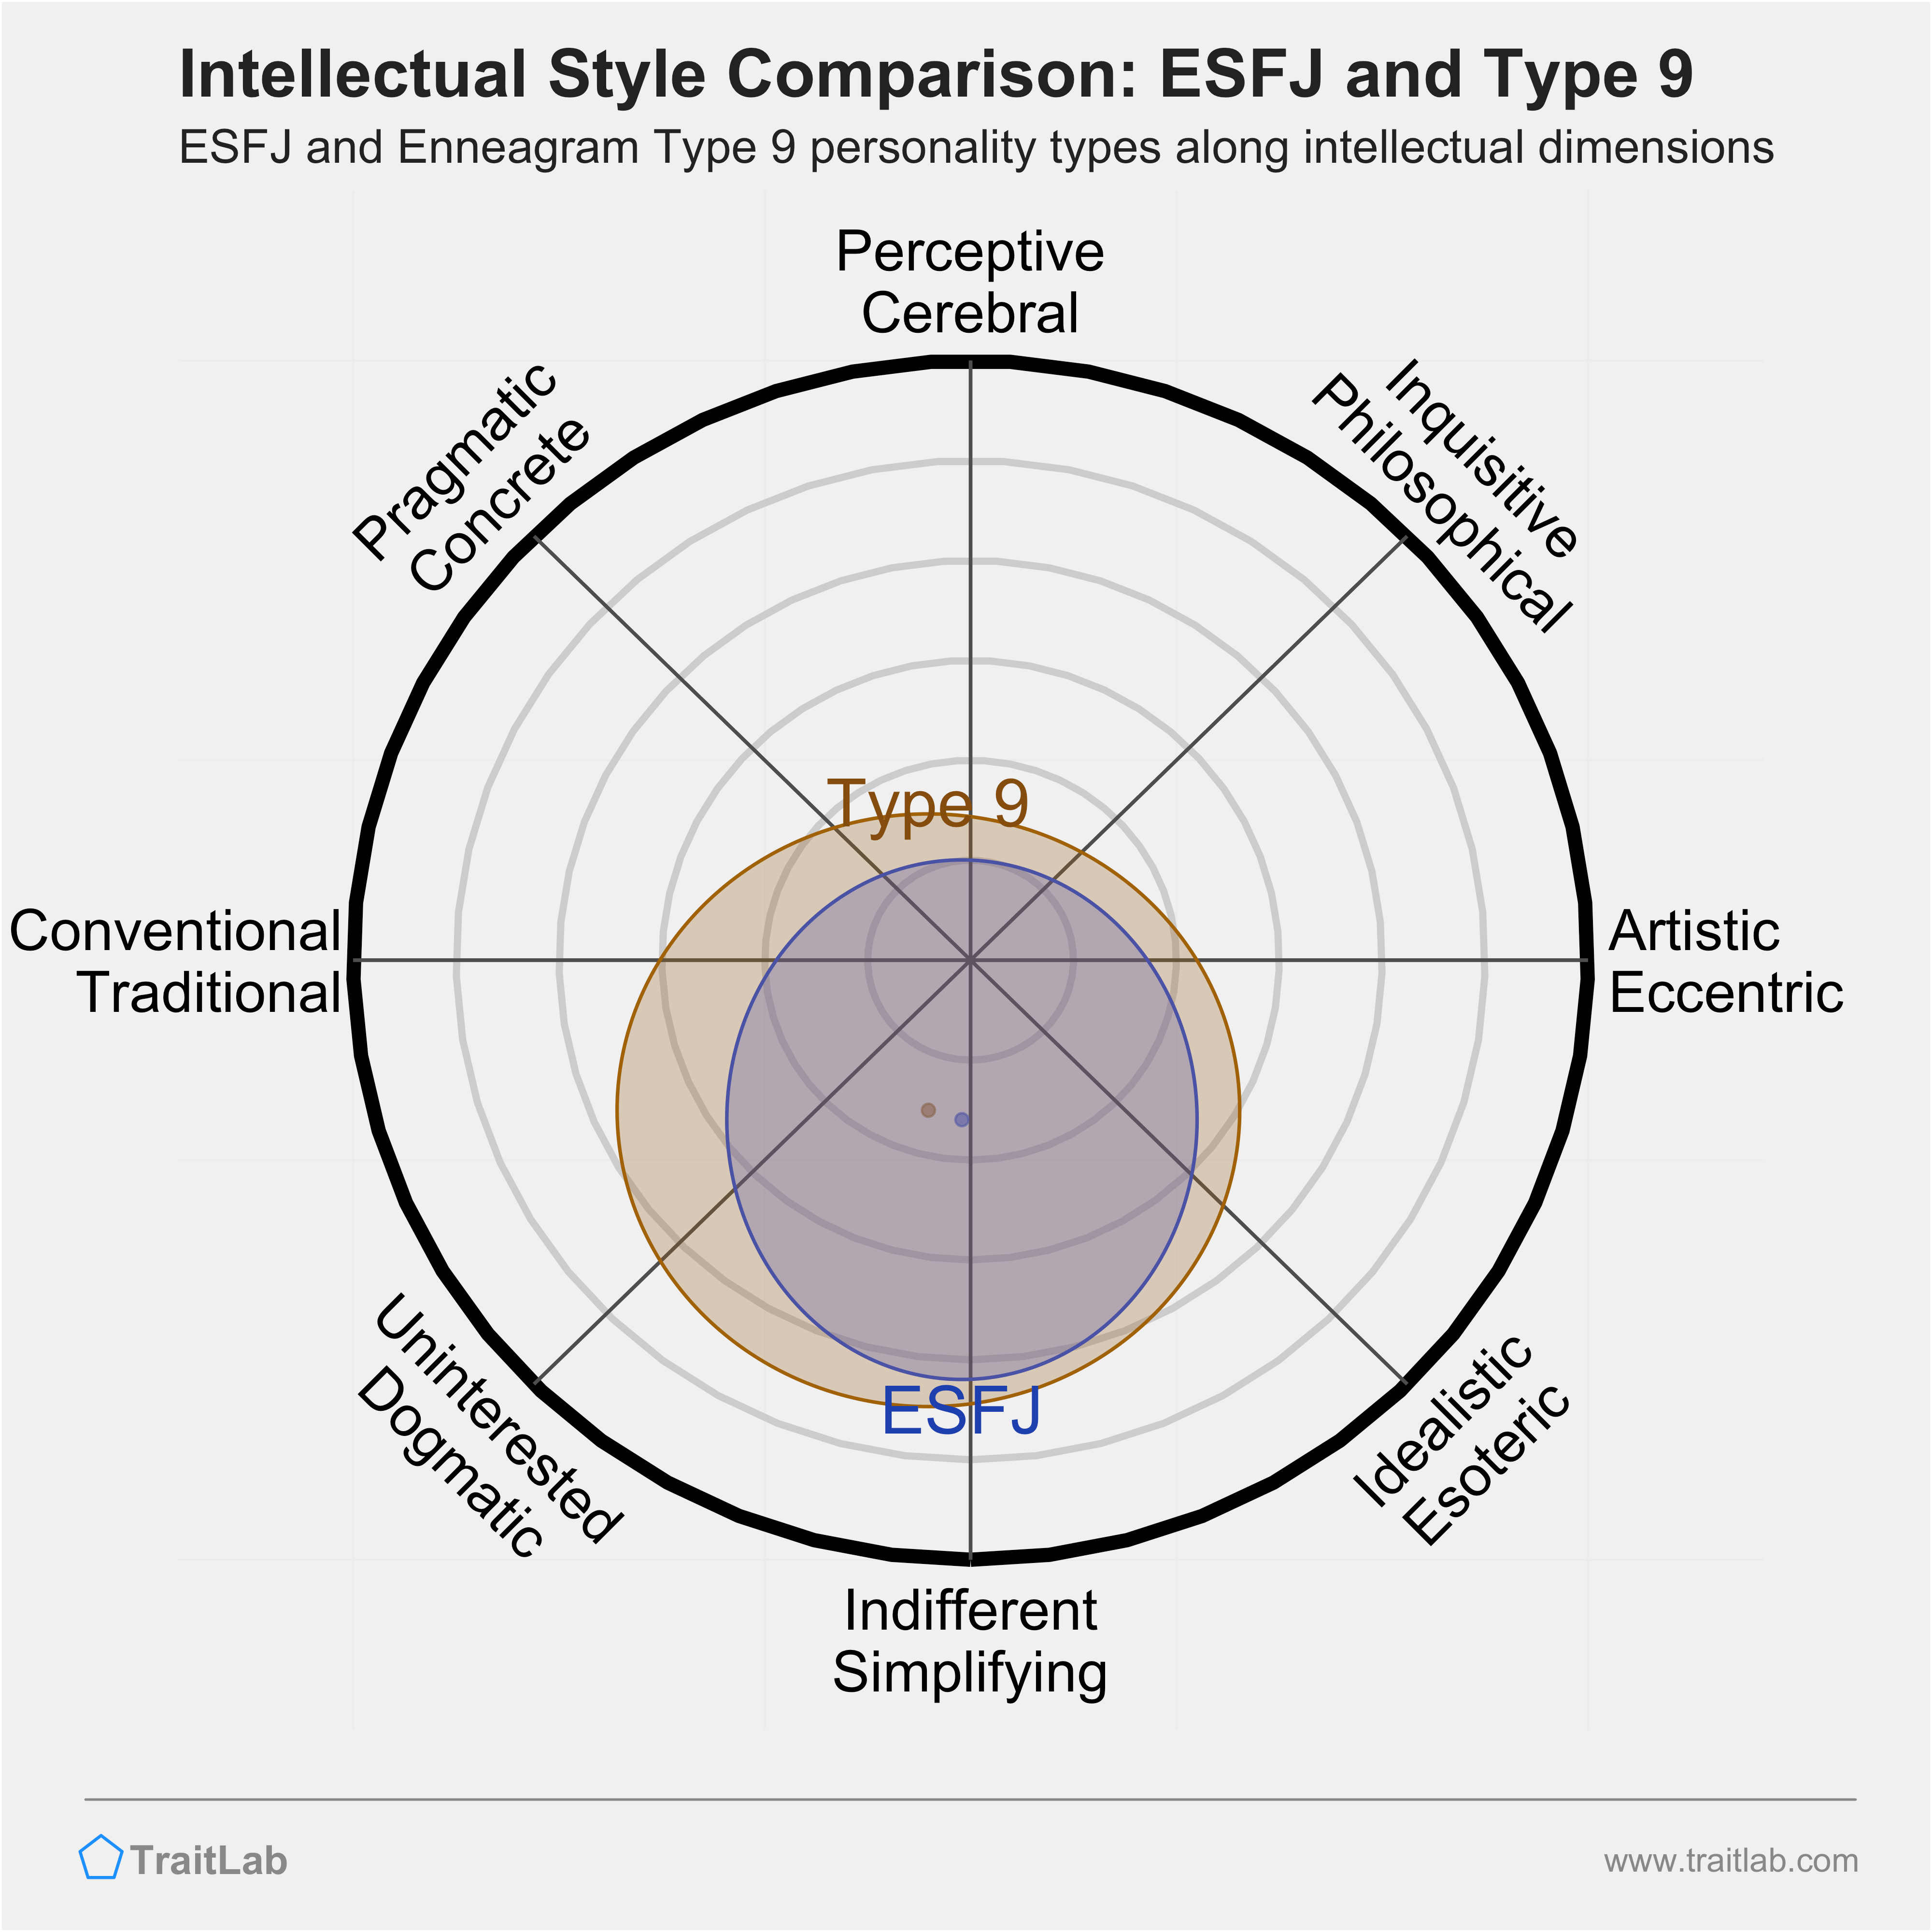 ESFJ and Type 9 comparison across intellectual dimensions